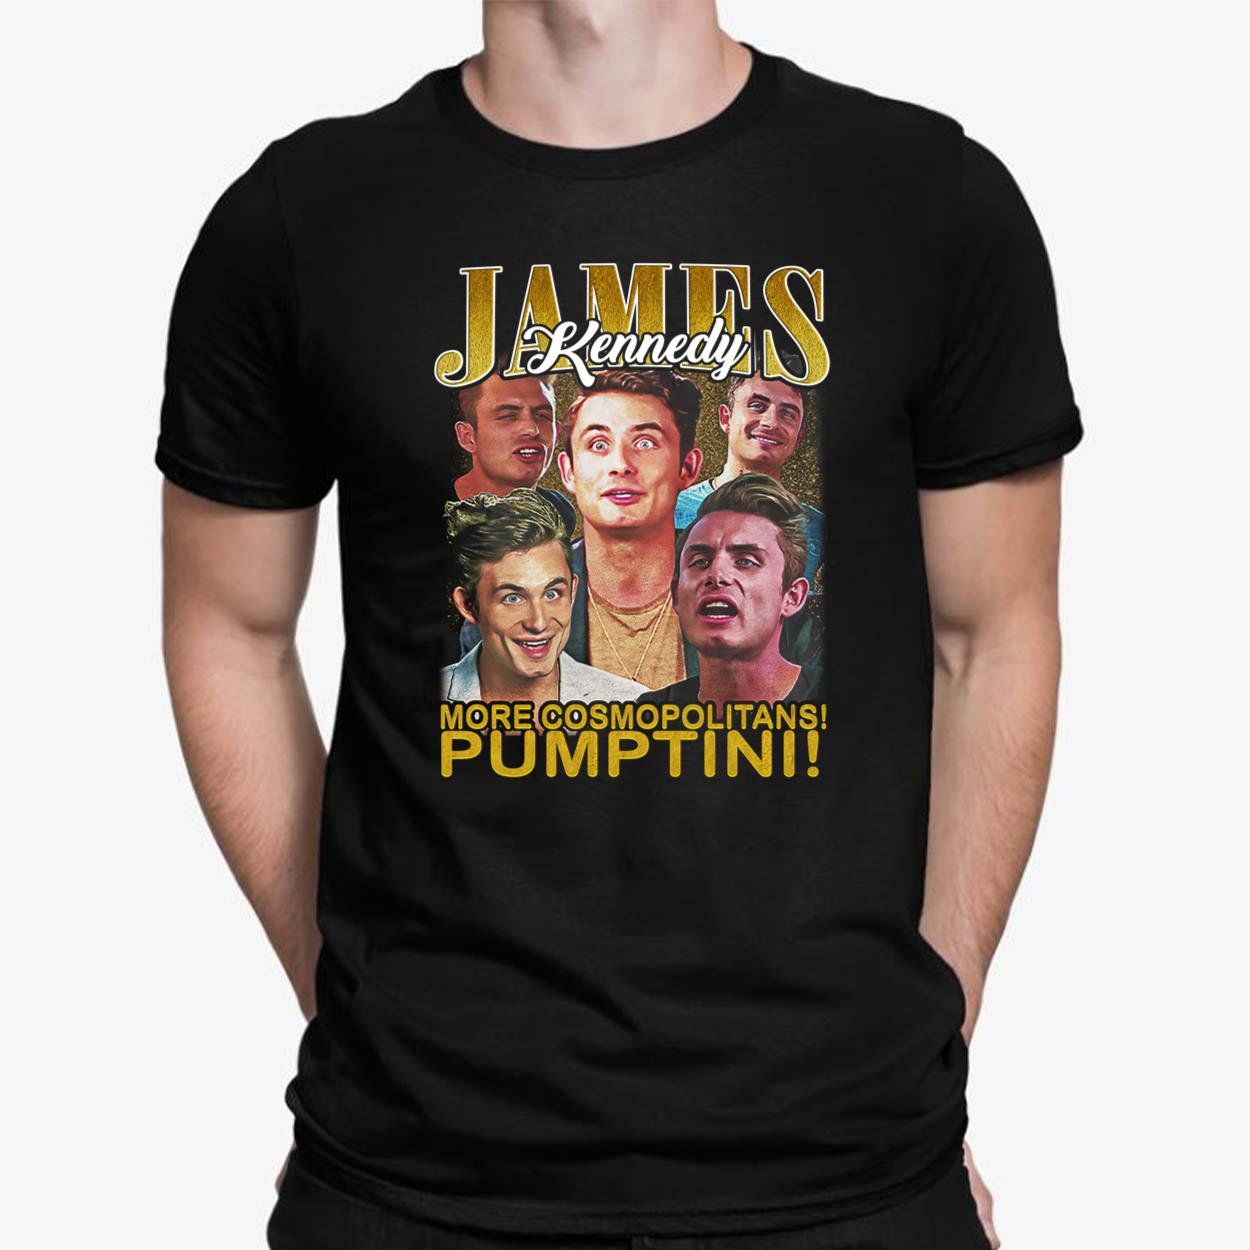 James Kennedy Quote Pumptin vintage shirt